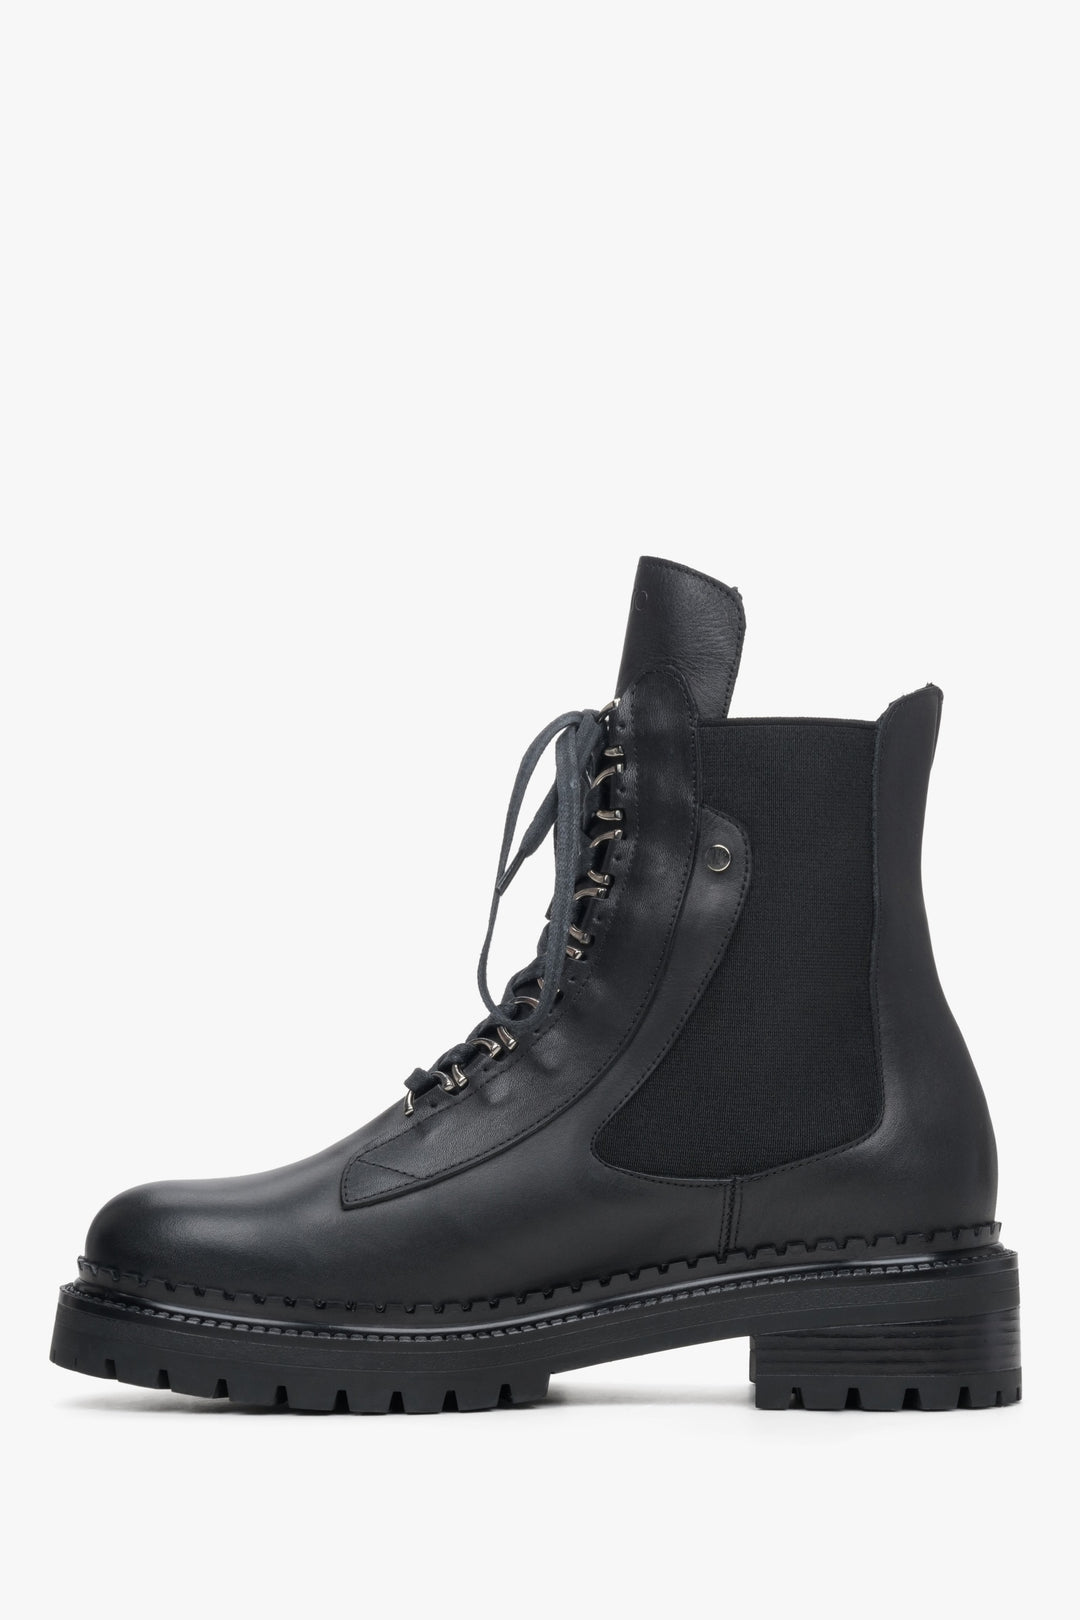 Women's lace-up ankle boots in black Estro - shoe profile.